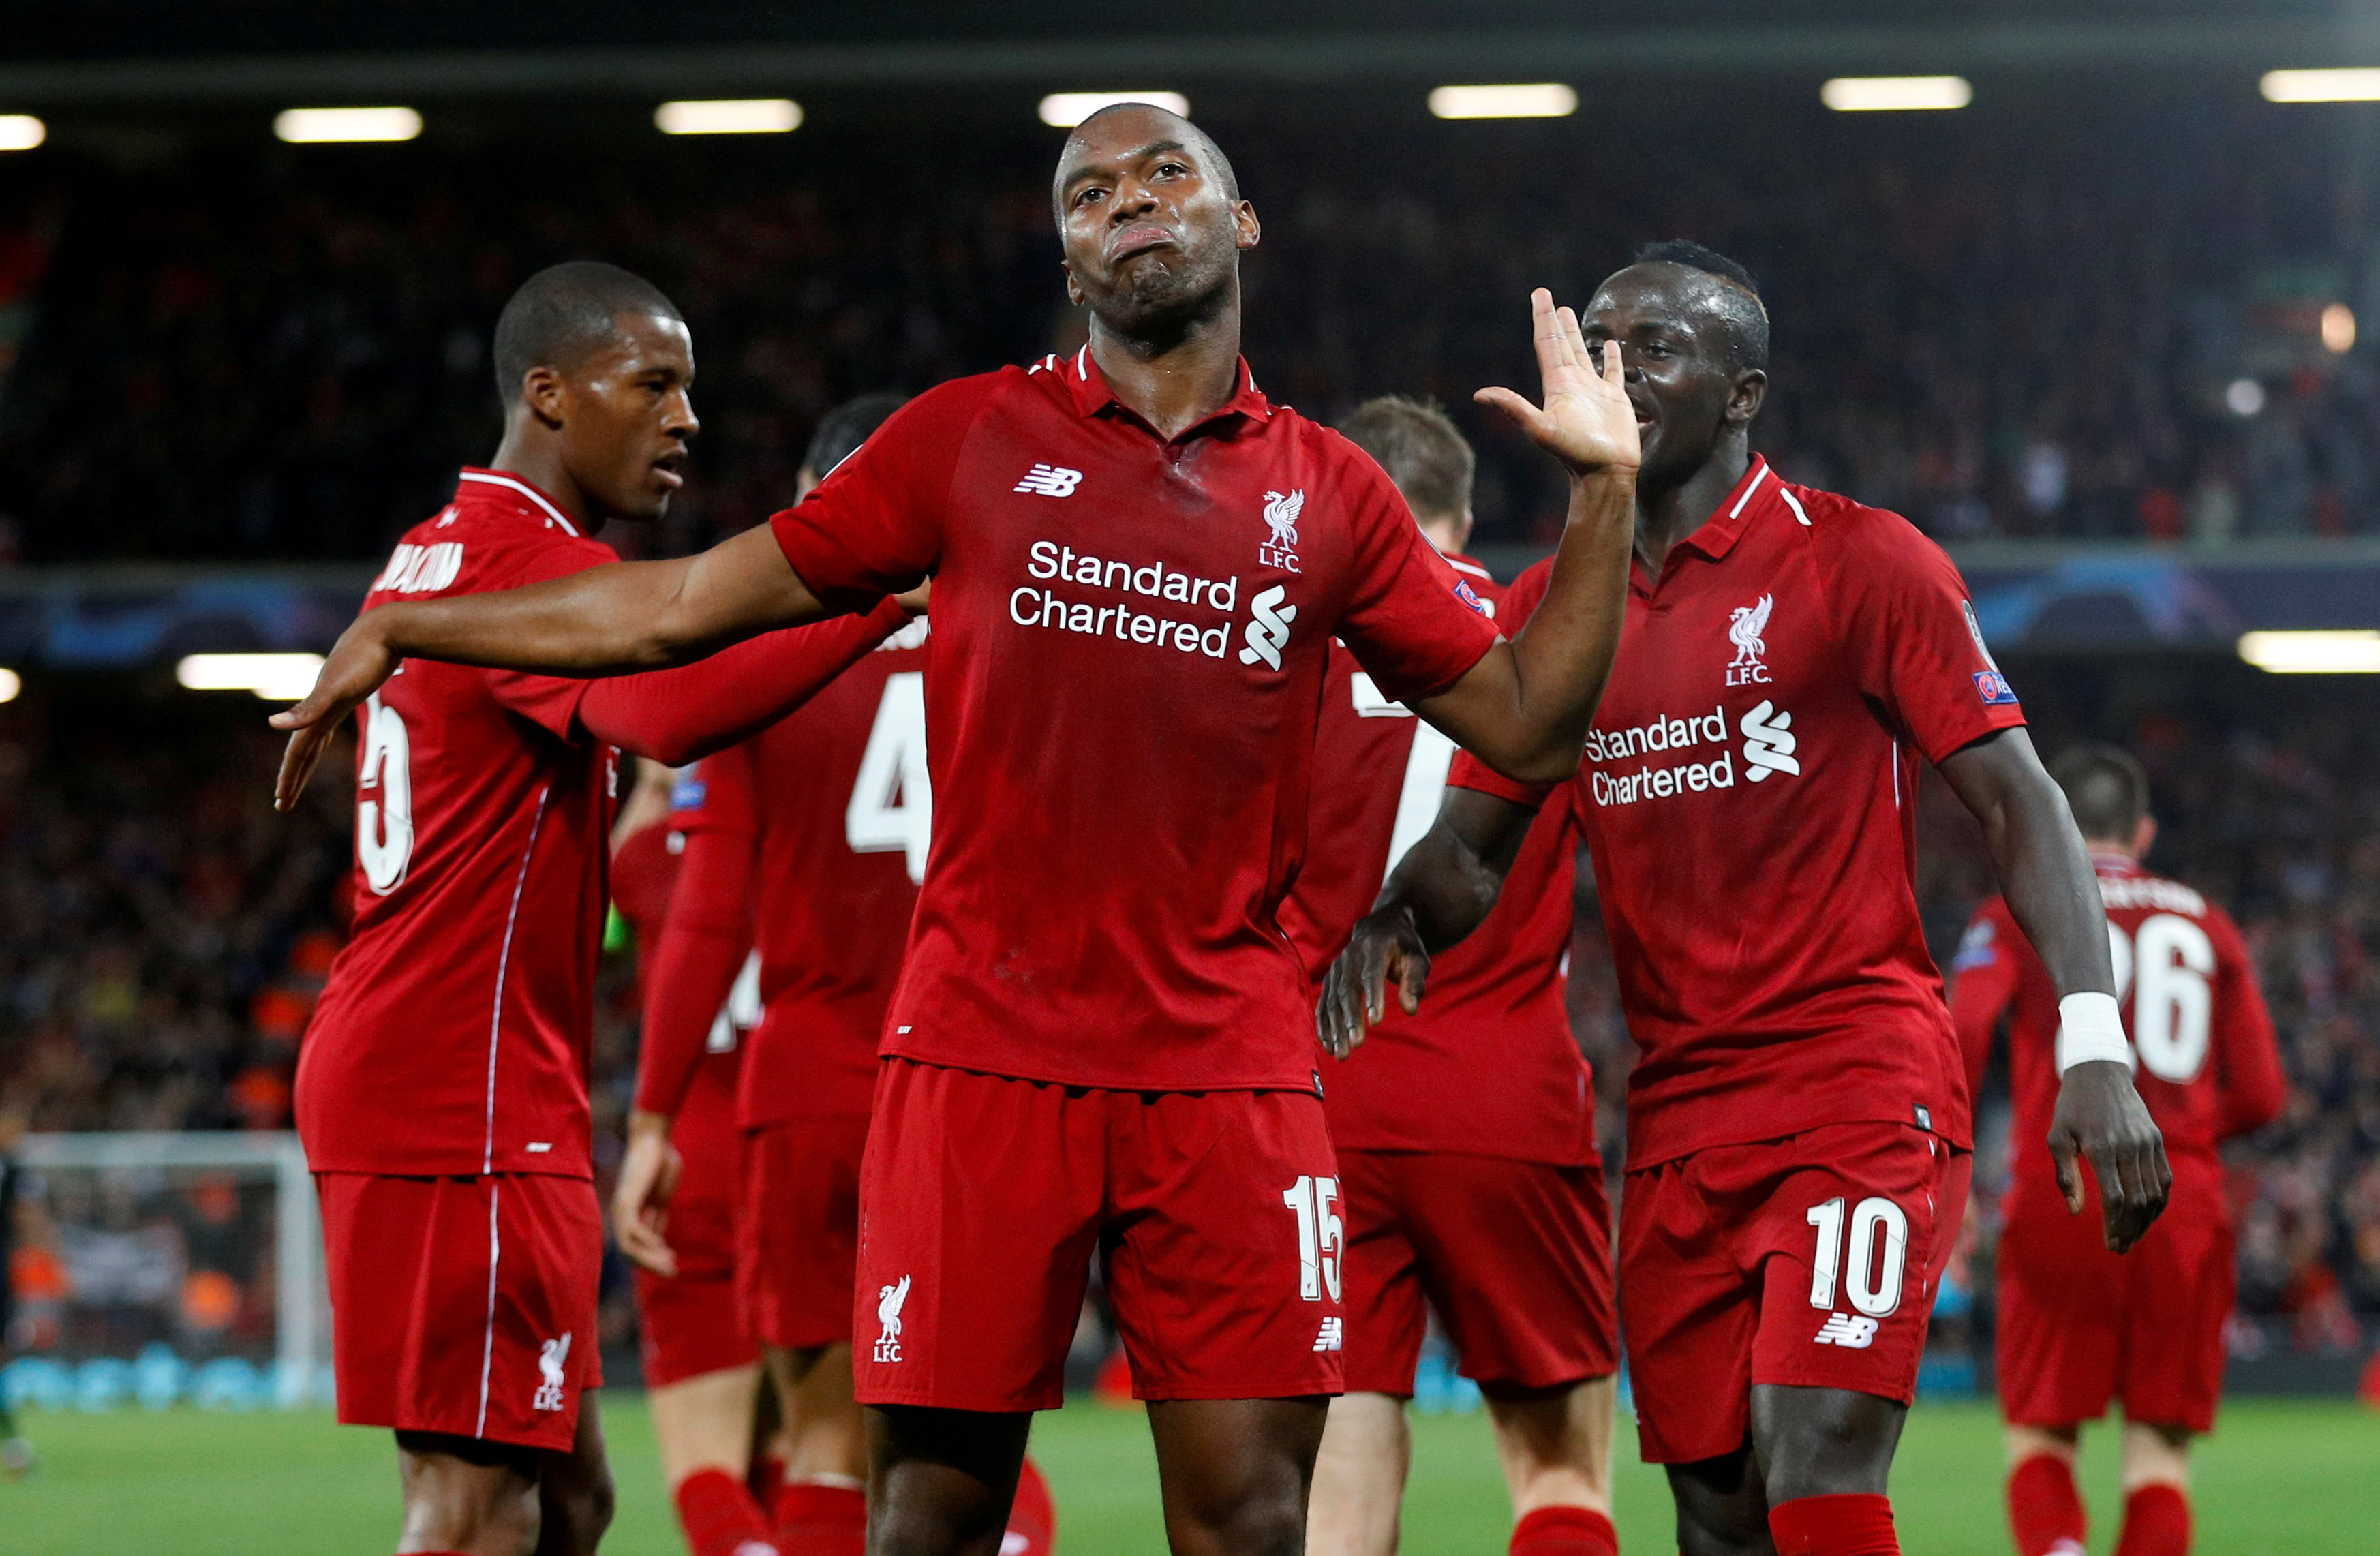 Football: Liverpool manager Klopp hails Sturridge's impressive return